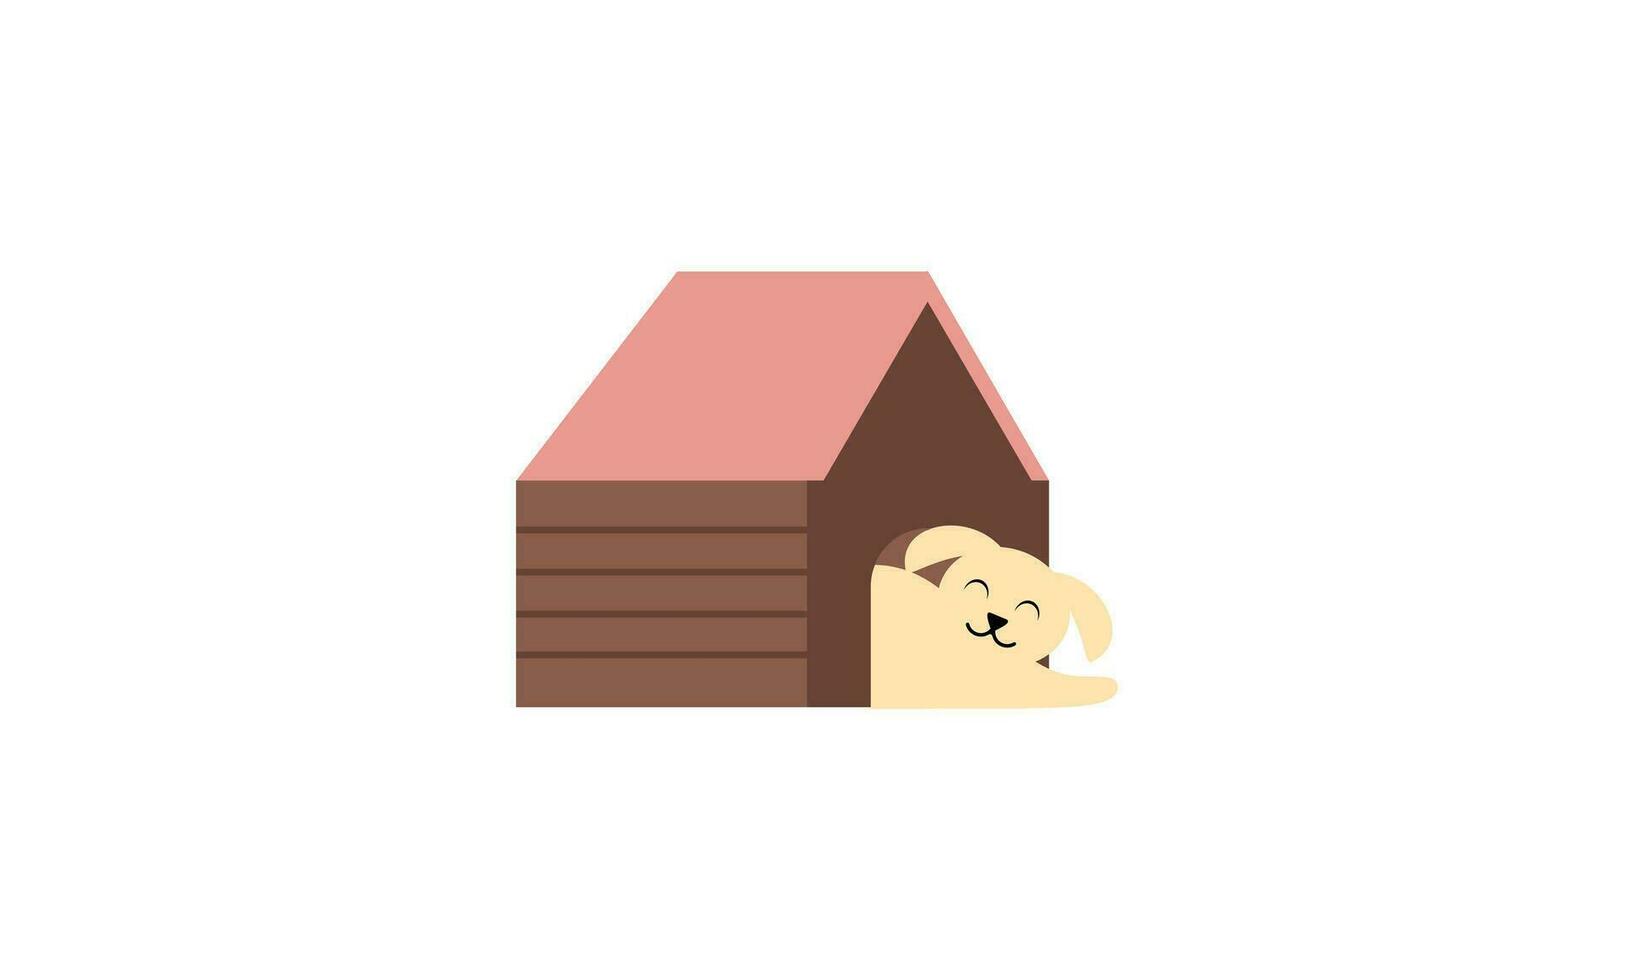 Dog cartoon inside wood house design vector